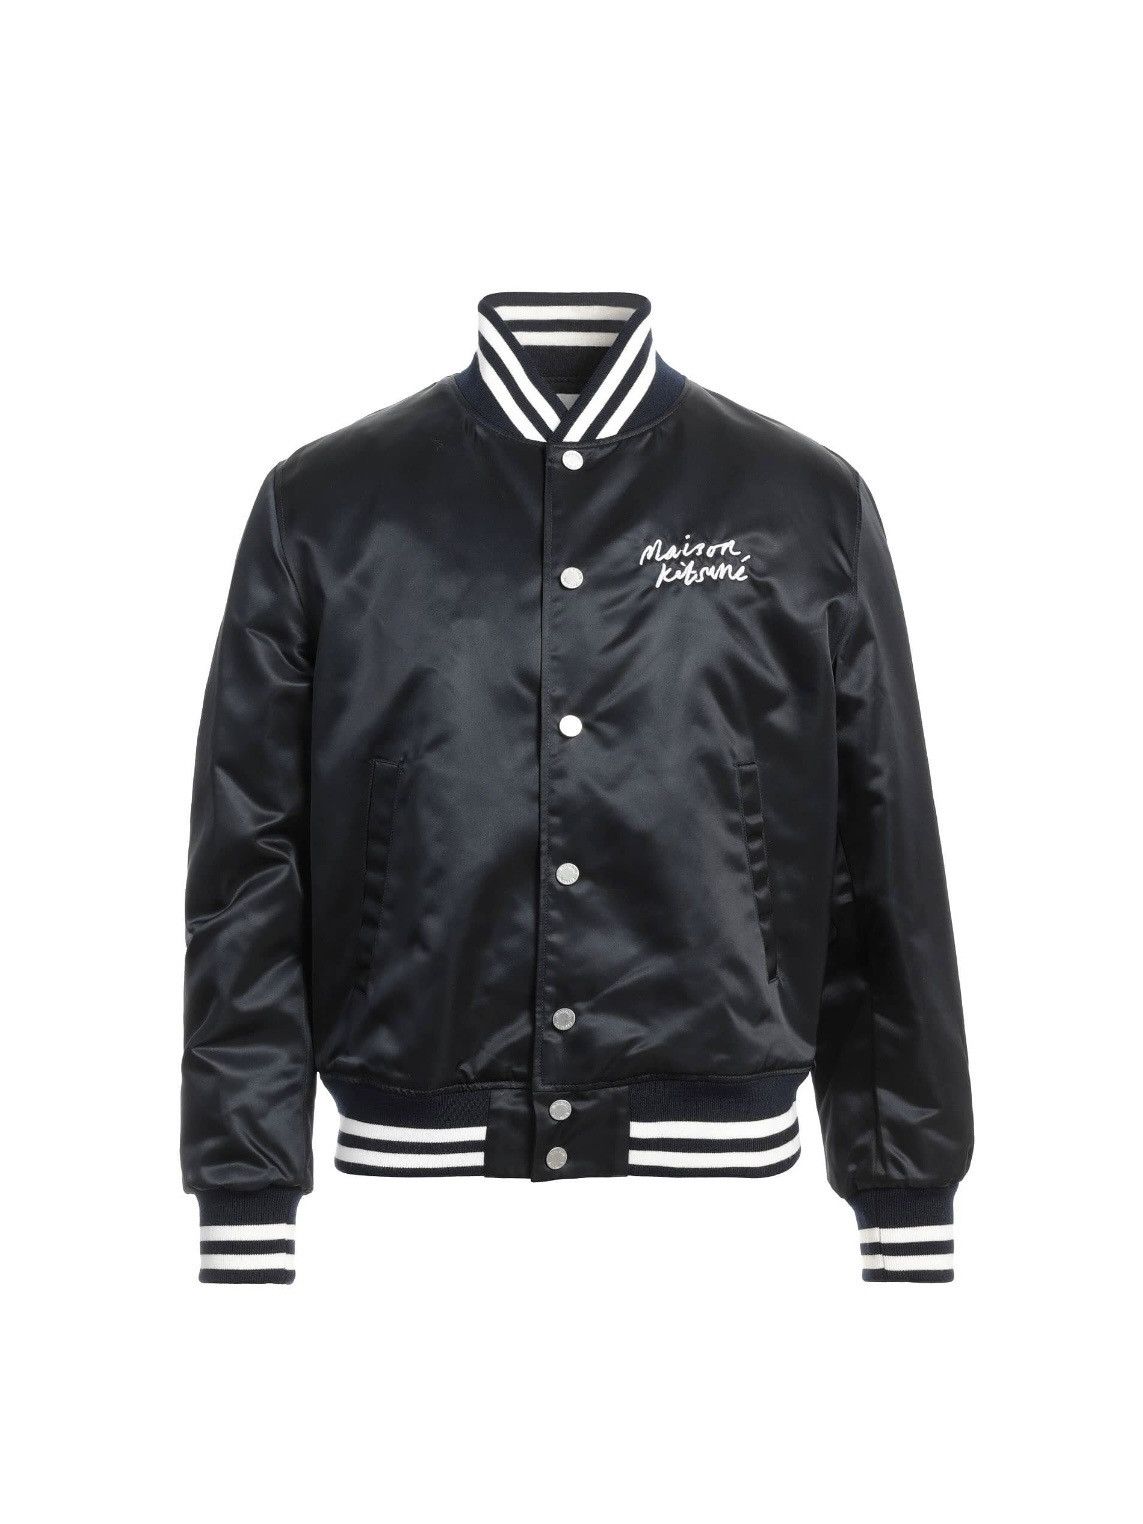 Maison Kitsune Bomber jacket | Grailed